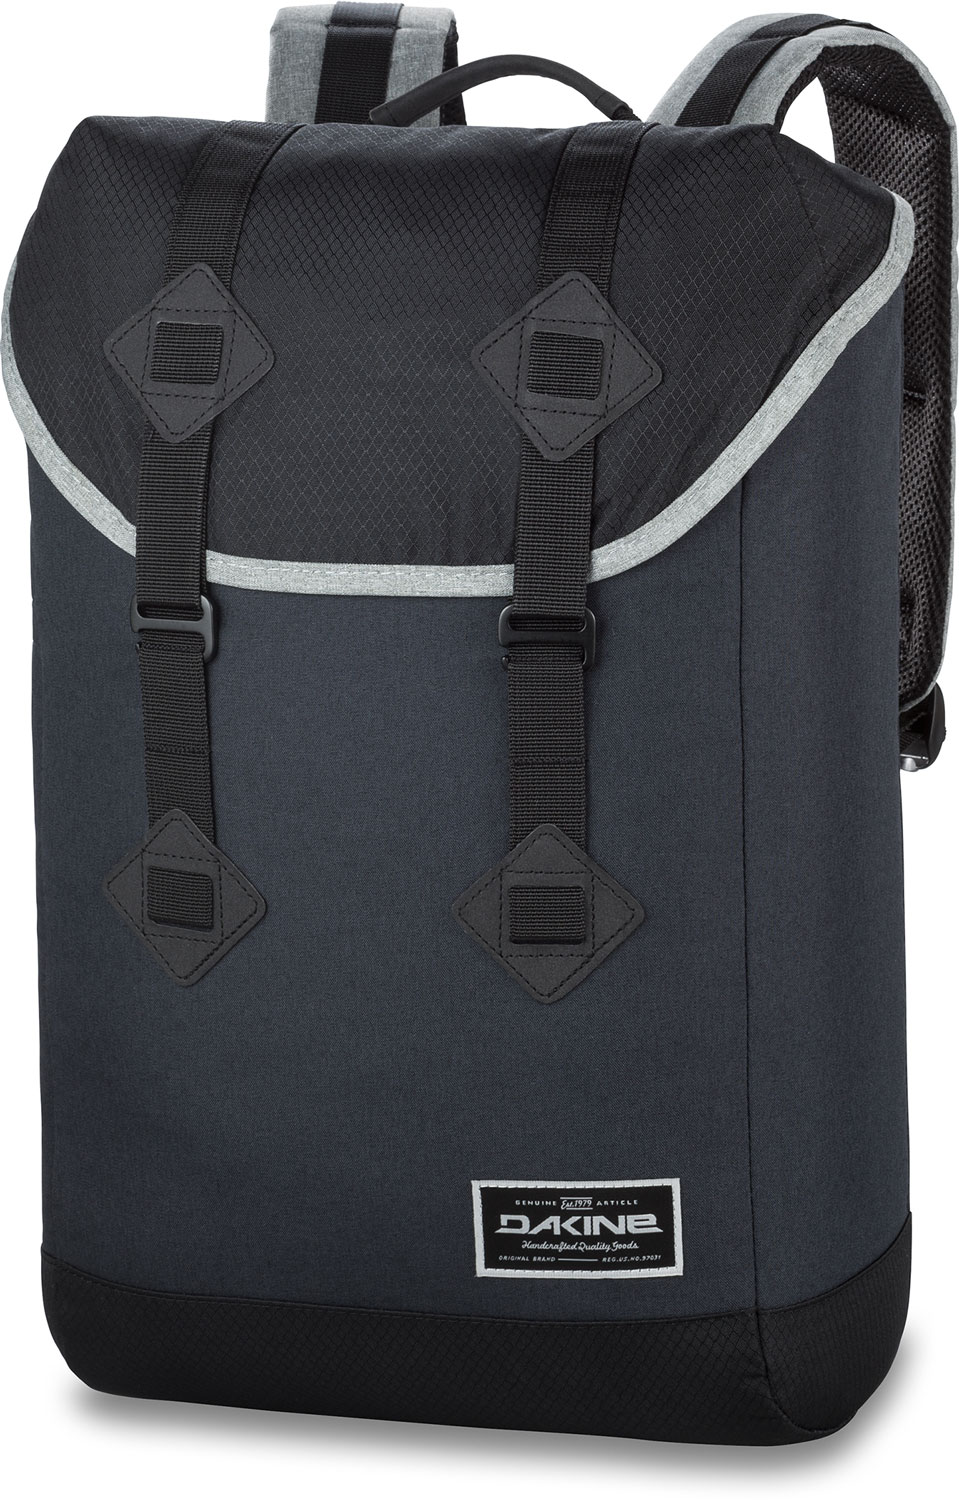 School fashion backpack